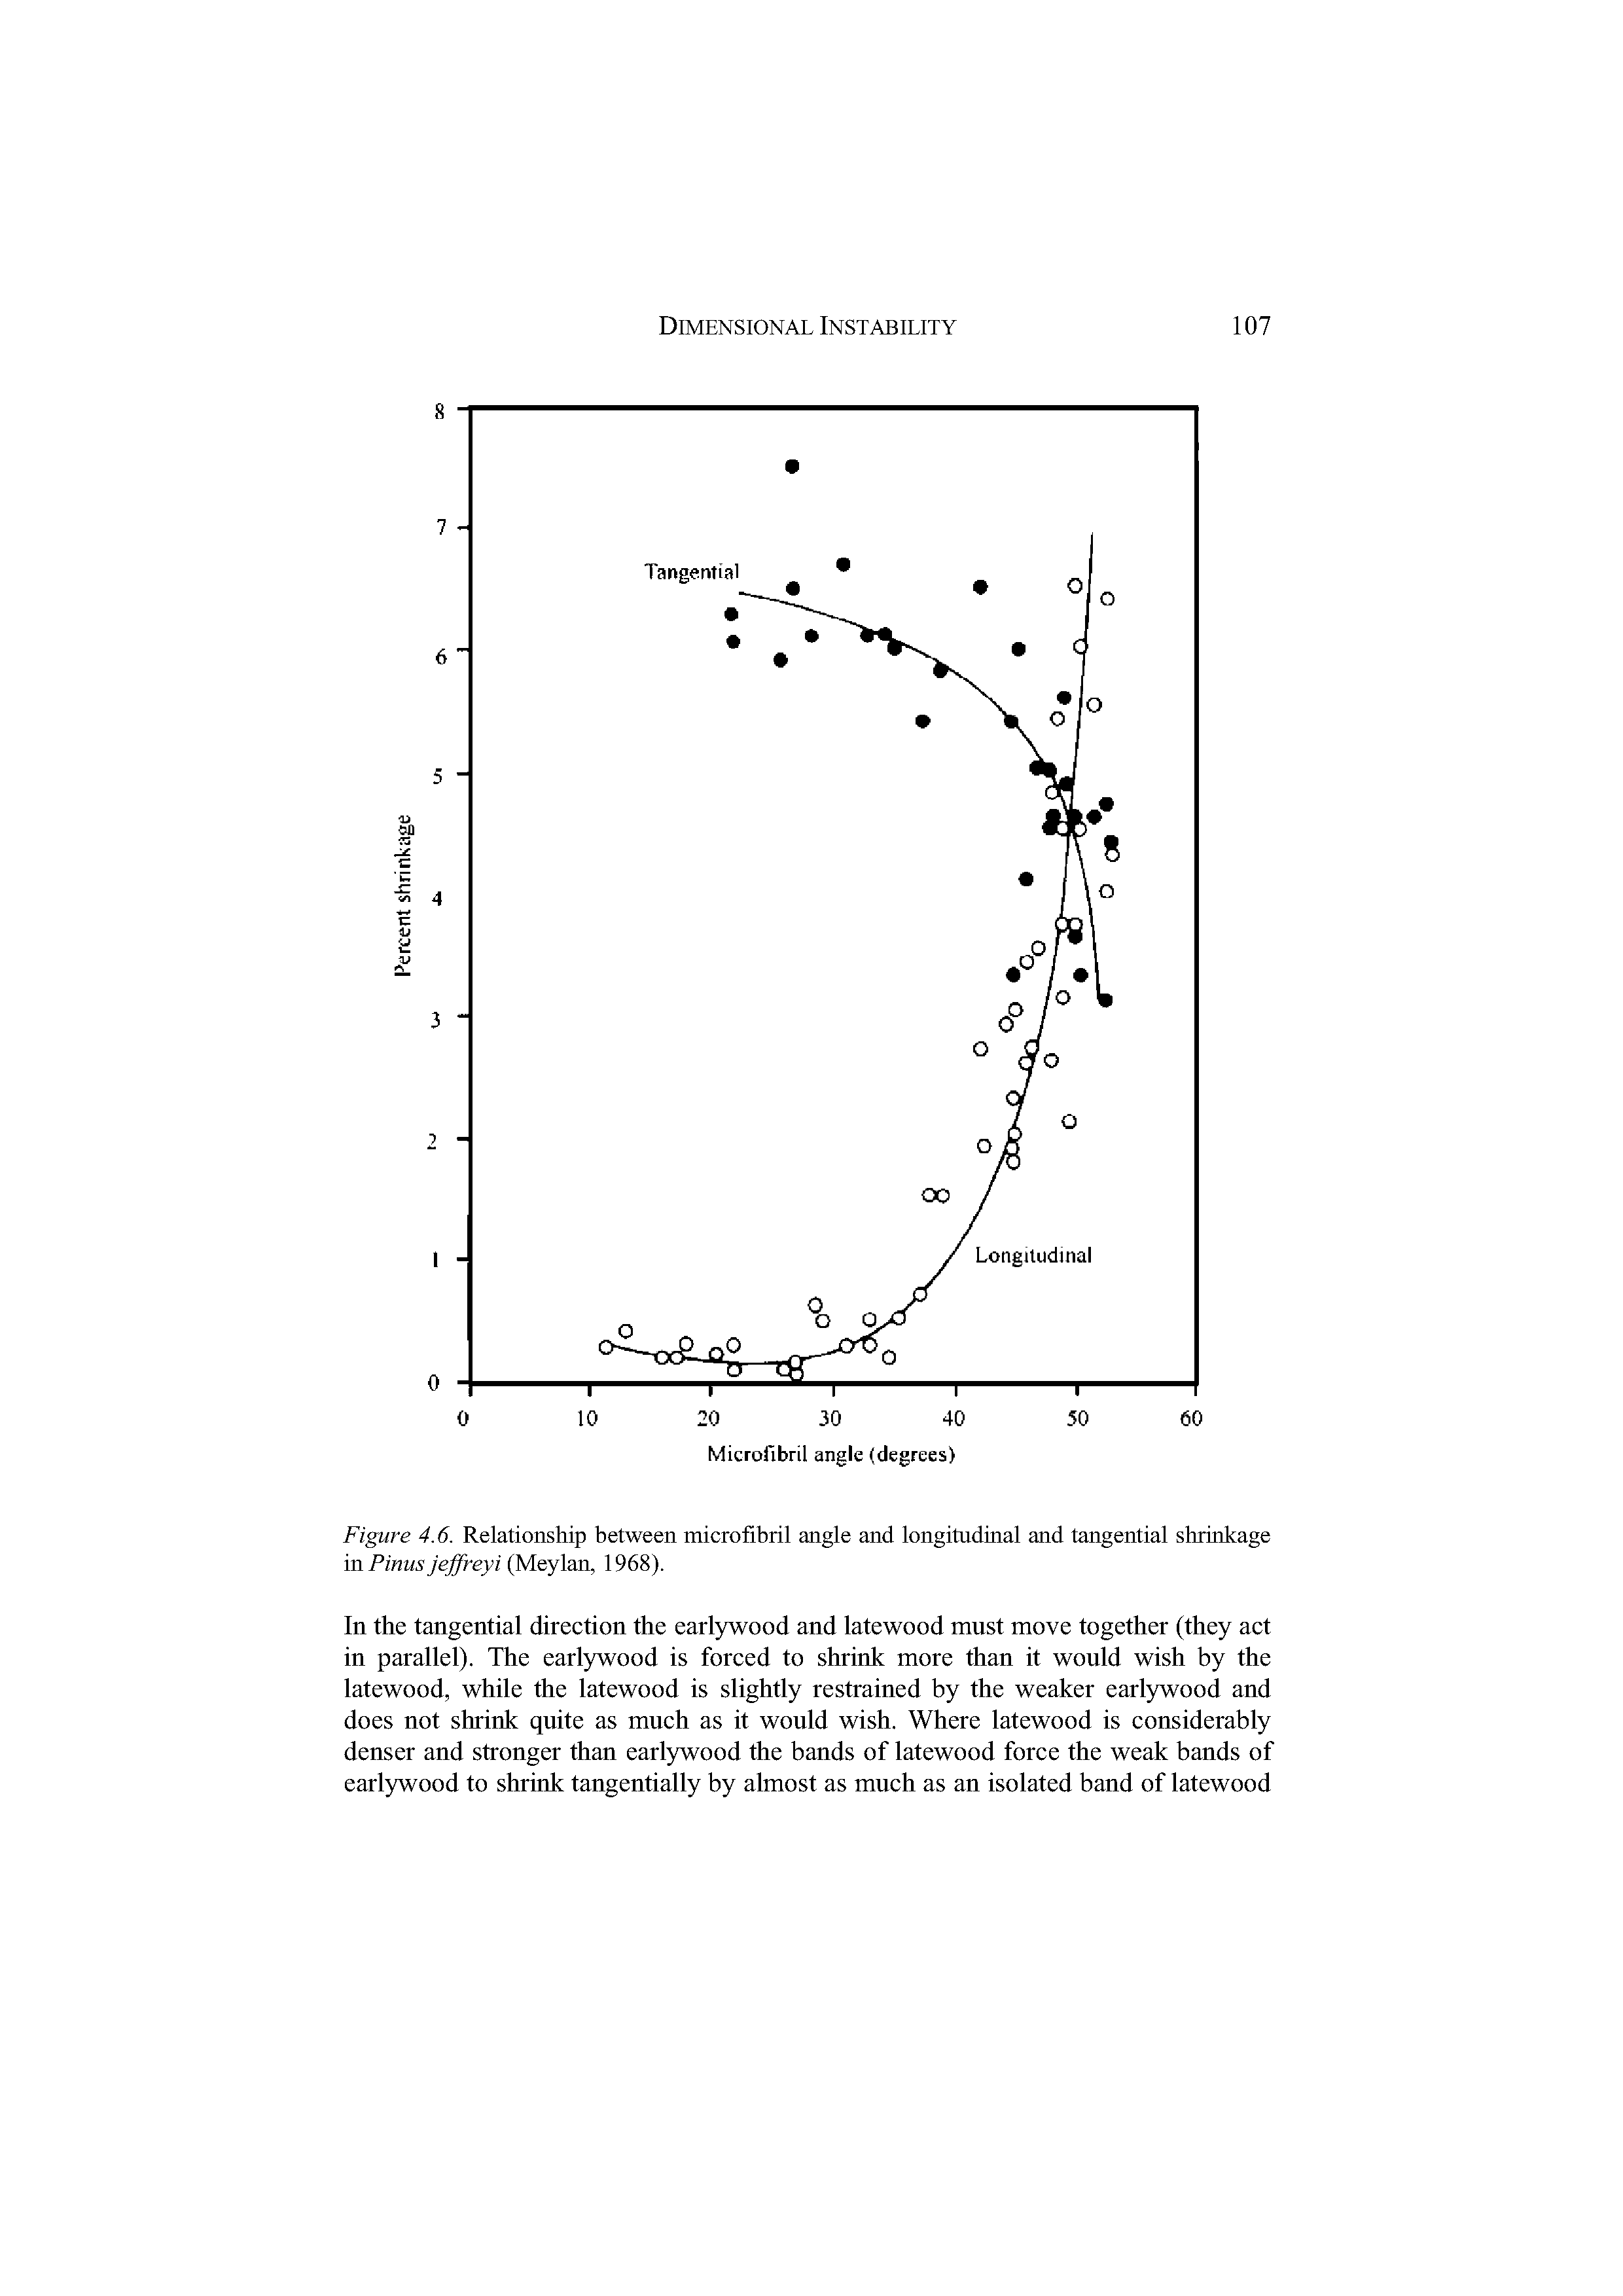 Figure 4.6. Relationship between microfibril angle and longitudinal and tangential shrinkage in Pinus jeffreyi (Meylan, 1968).